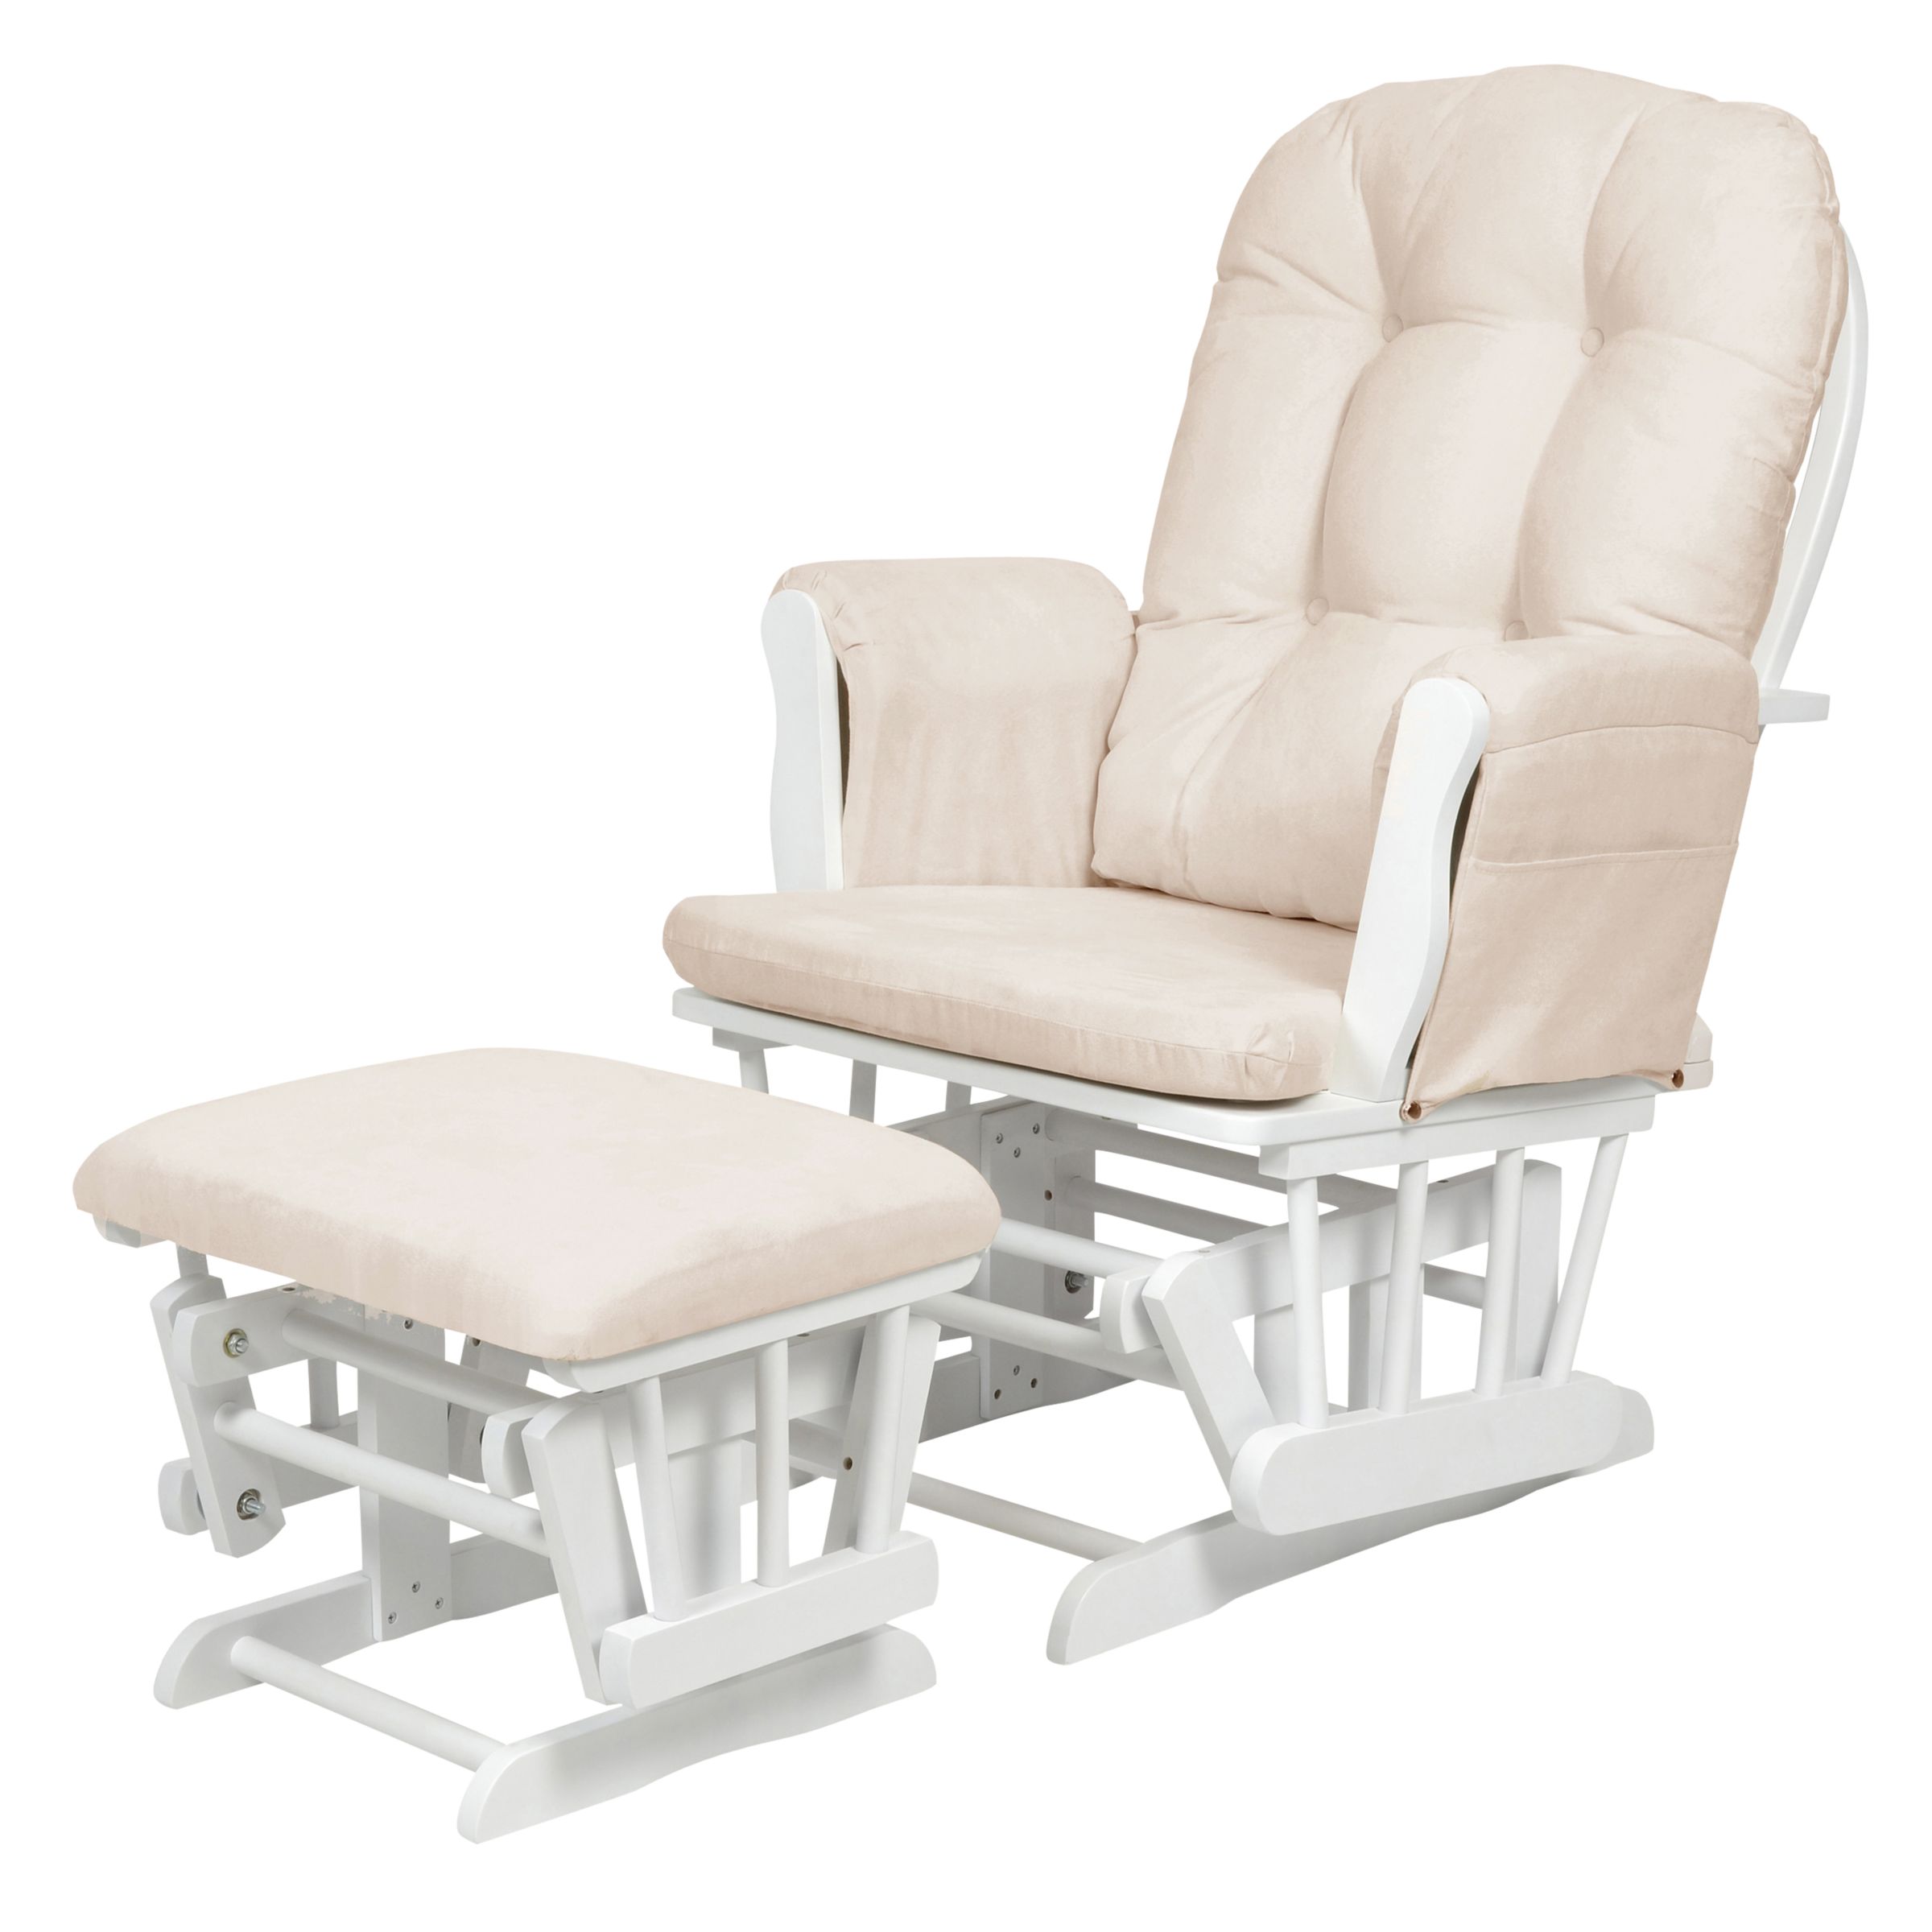 Kub Haywood Glider Nursing Chair and Footstool, White at John Lewis